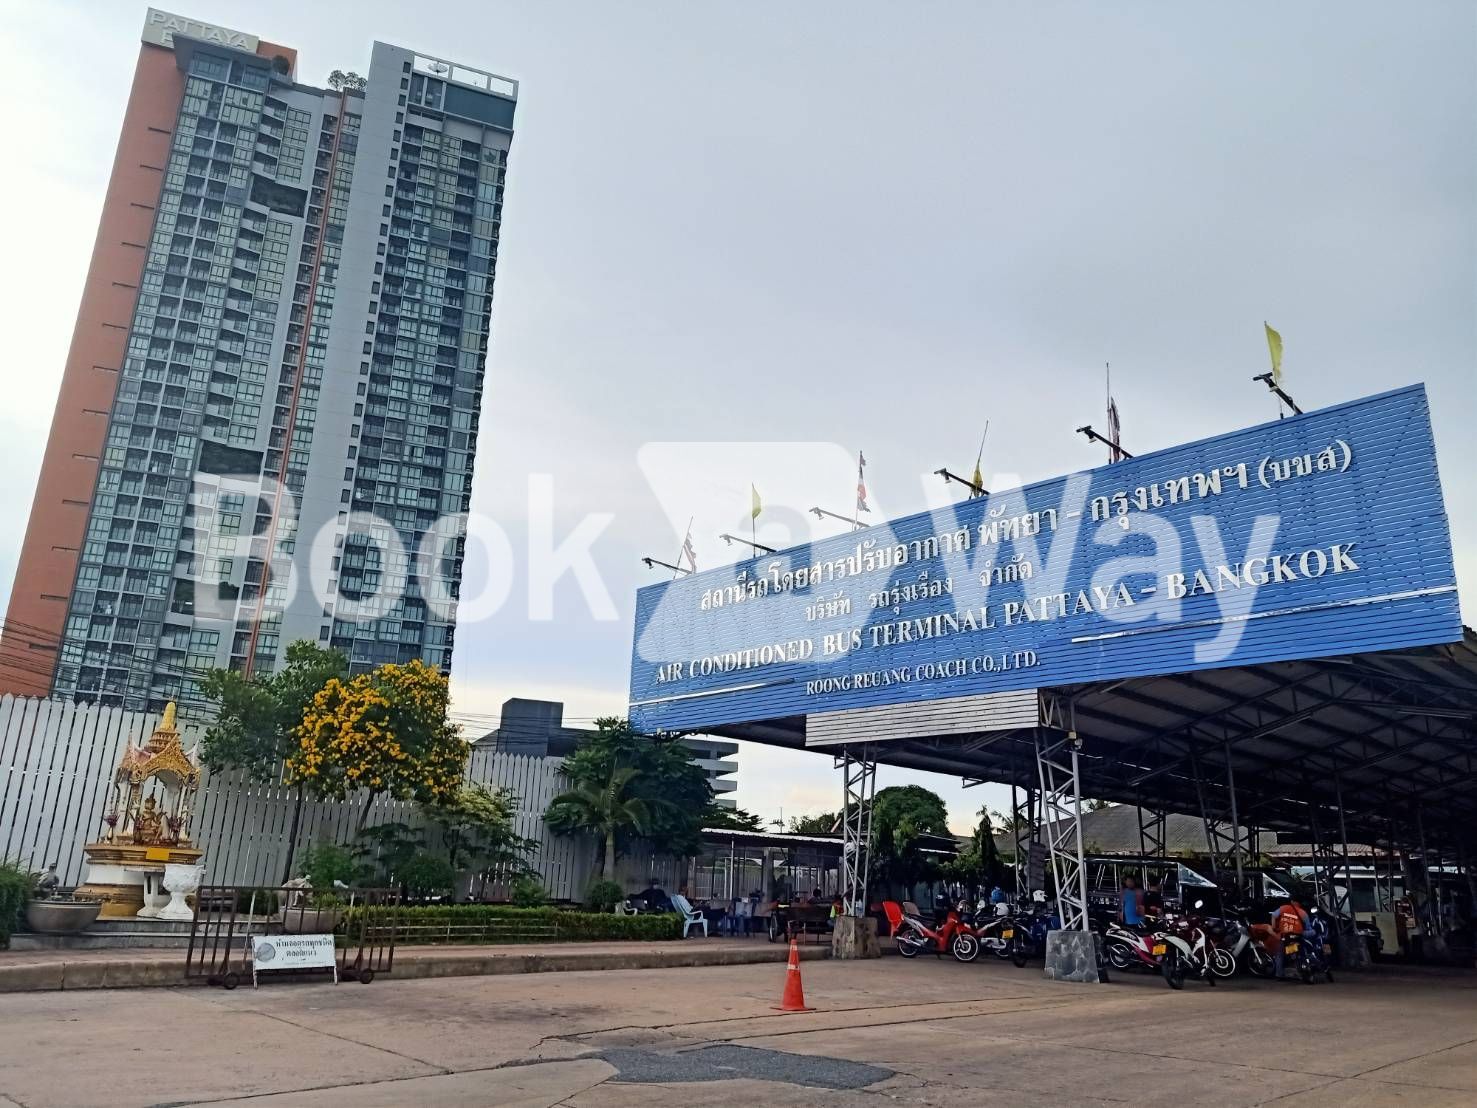 North Pattaya Bus Terminal